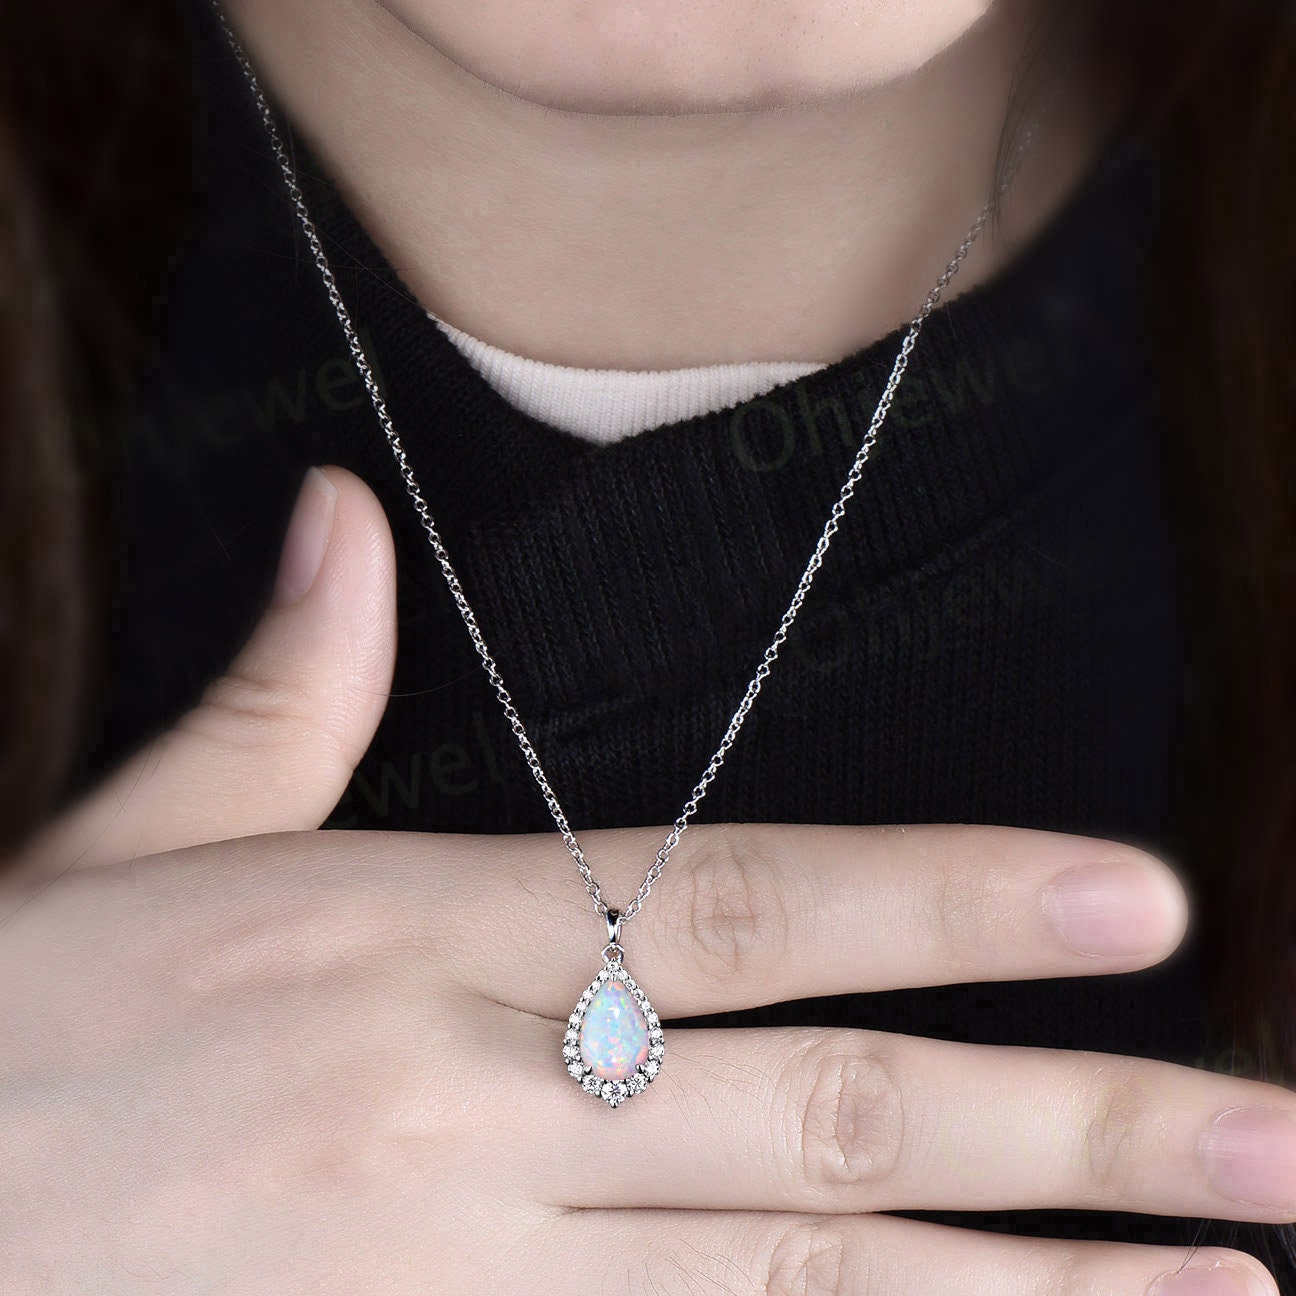 Pear cut white opal necklace snowdrift halo diamond moissanite Pendant women 14k rose gold October birthstone anniversary gift jewelry